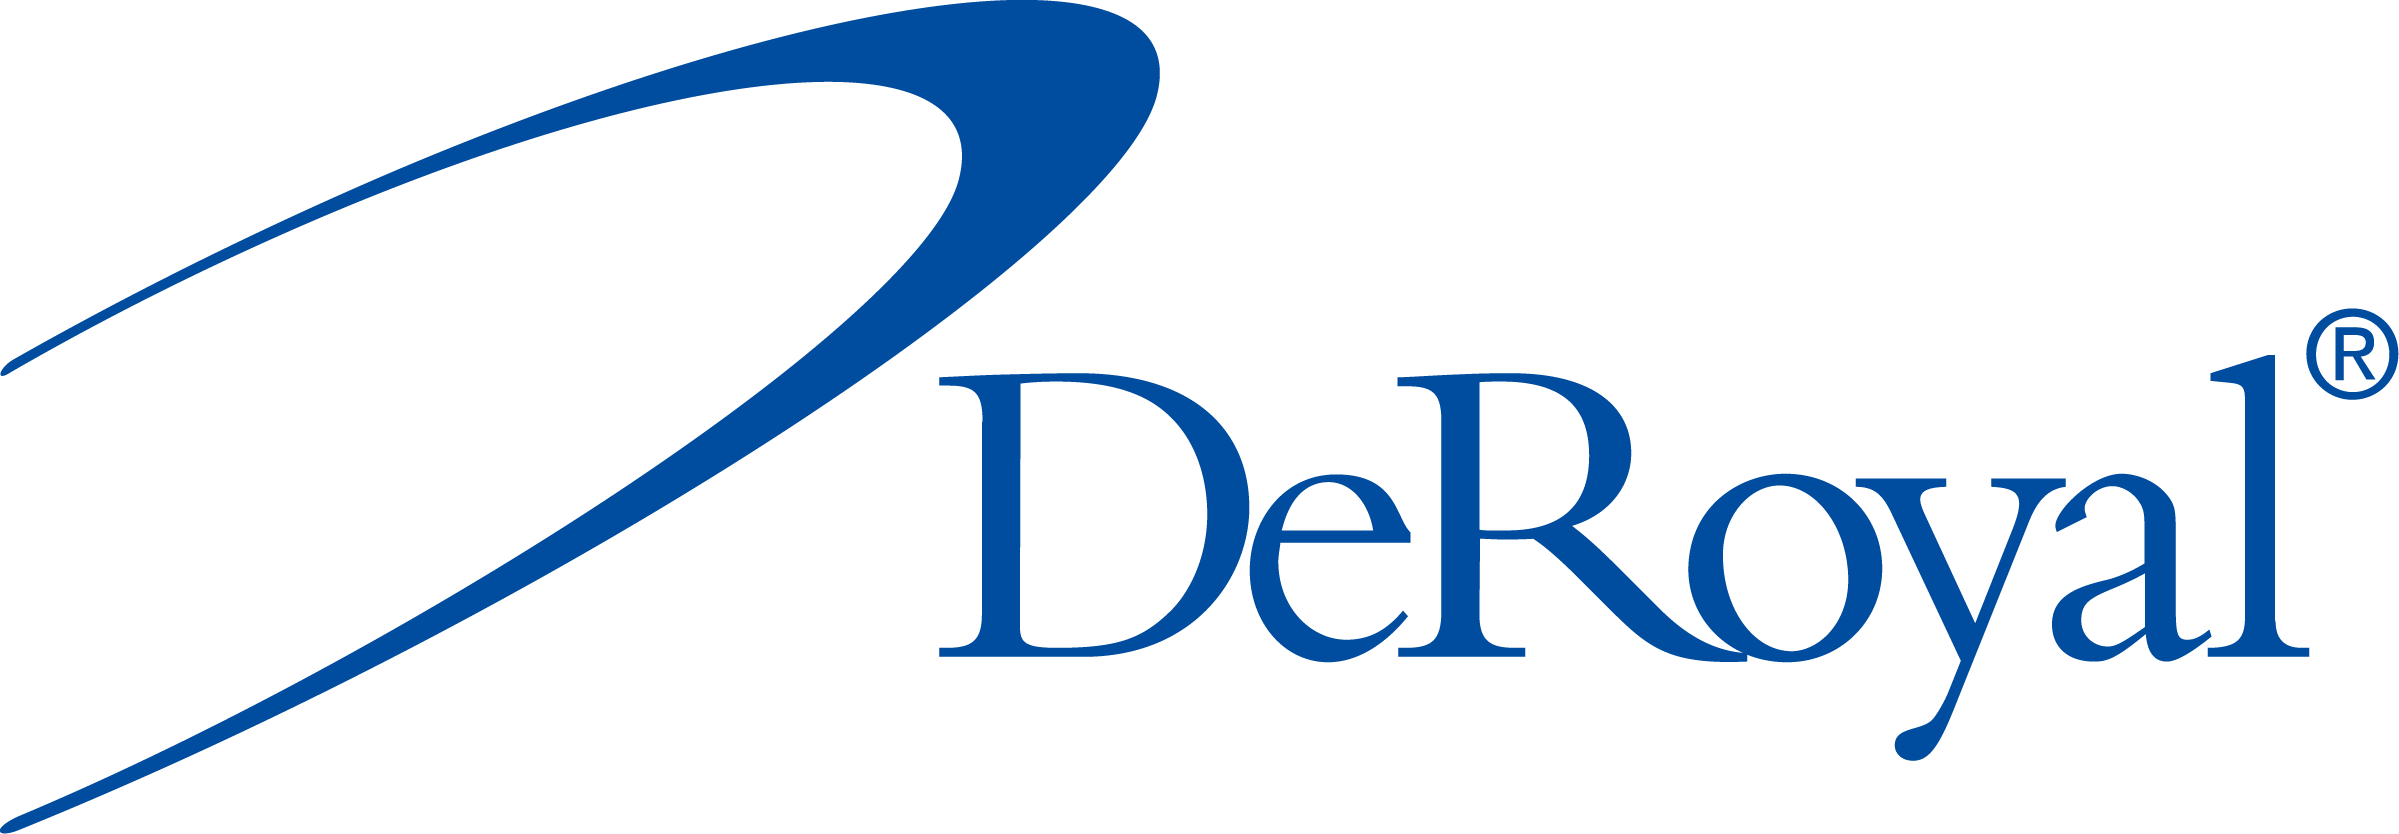 DeRoyal logo